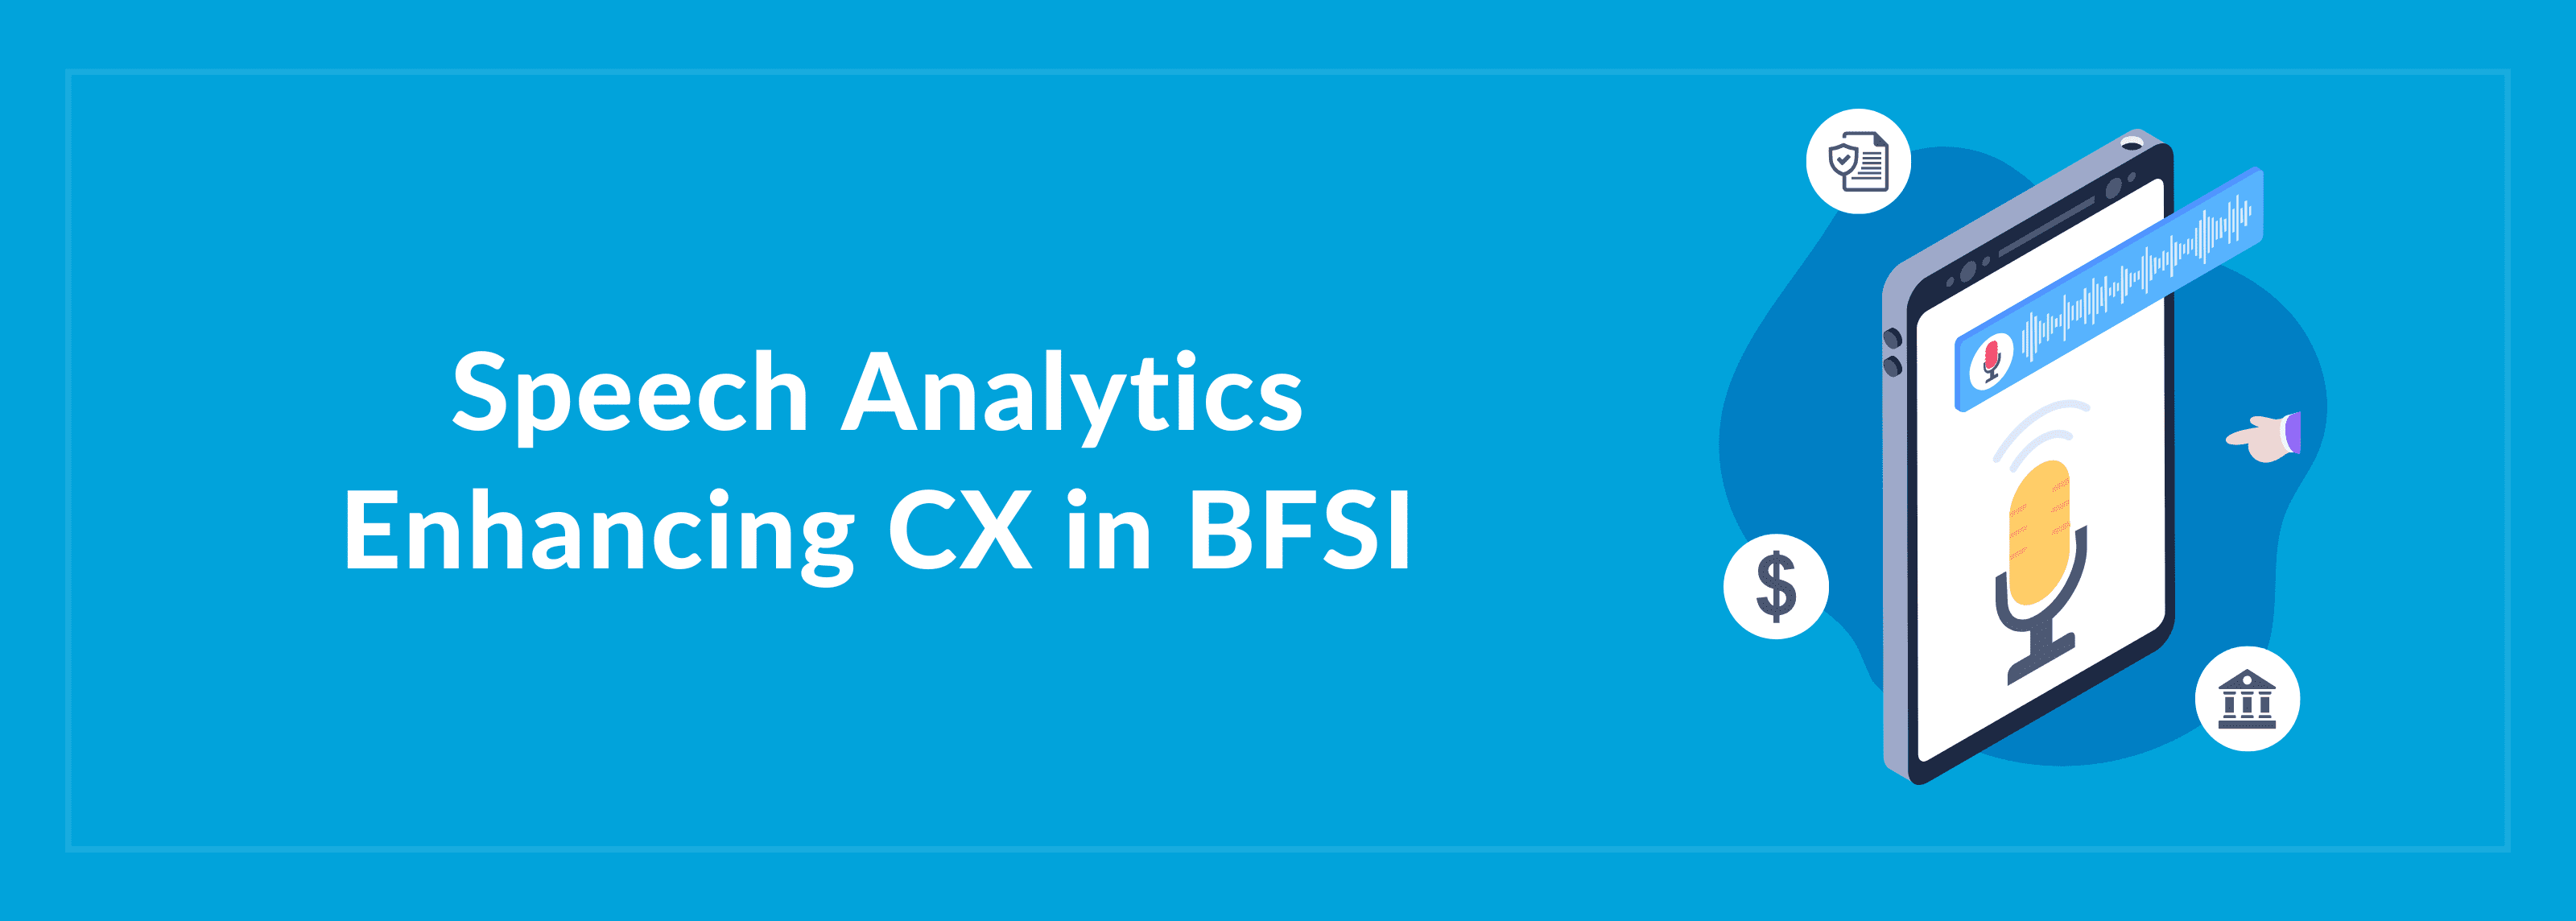 Speech Analytics Enhancing CX in BFSI